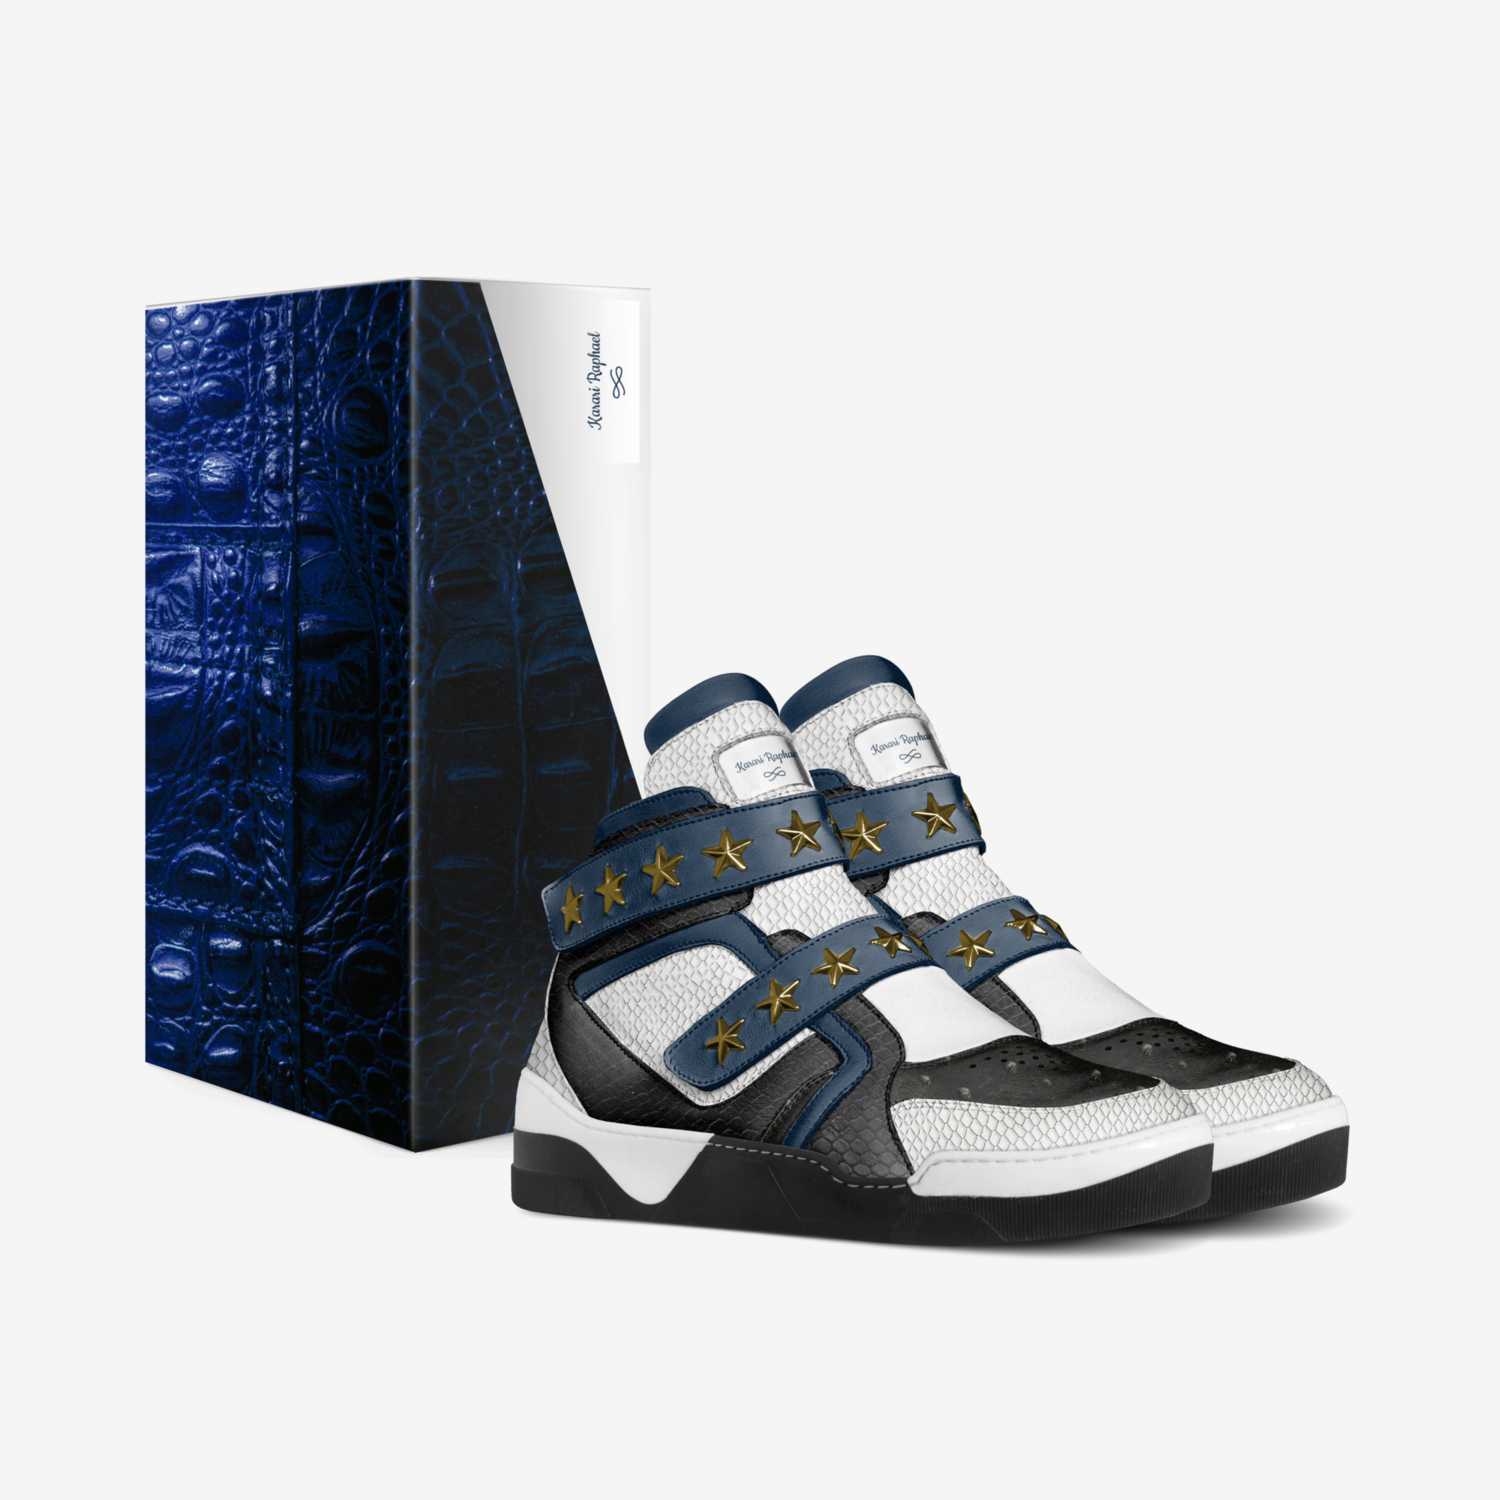 Karari Raphael custom made in Italy shoes by Lamar Williams | Box view